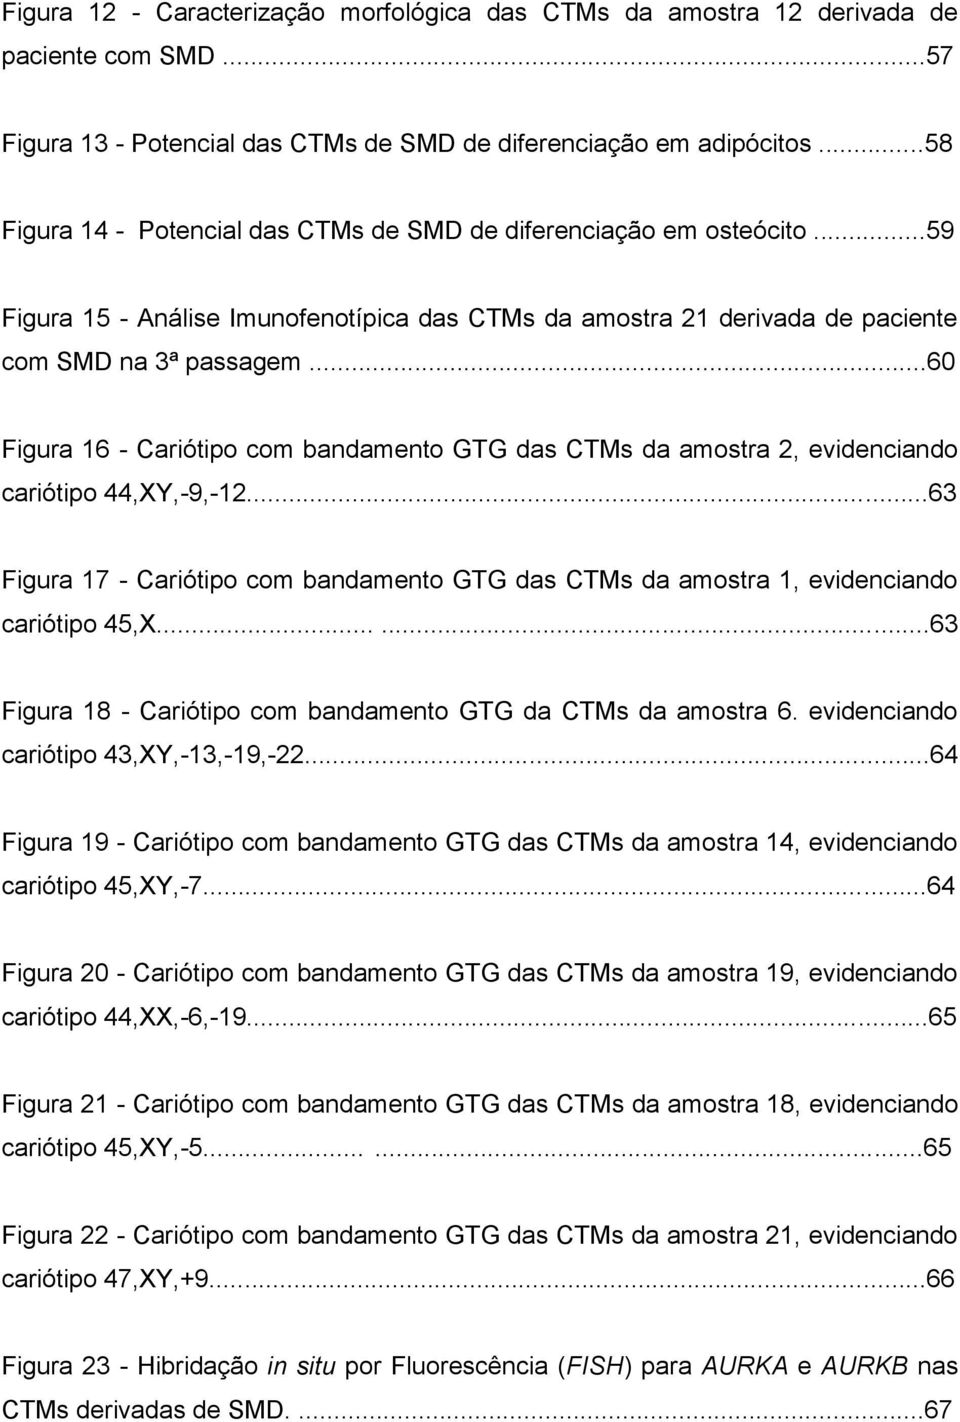 ..60 Figura 16 - Cariótipo com bandamento GTG das CTMs da amostra 2, evidenciando cariótipo 44,XY,-9,-12...63 Figura 17 - Cariótipo com bandamento GTG das CTMs da amostra 1, evidenciando cariótipo 45,X.